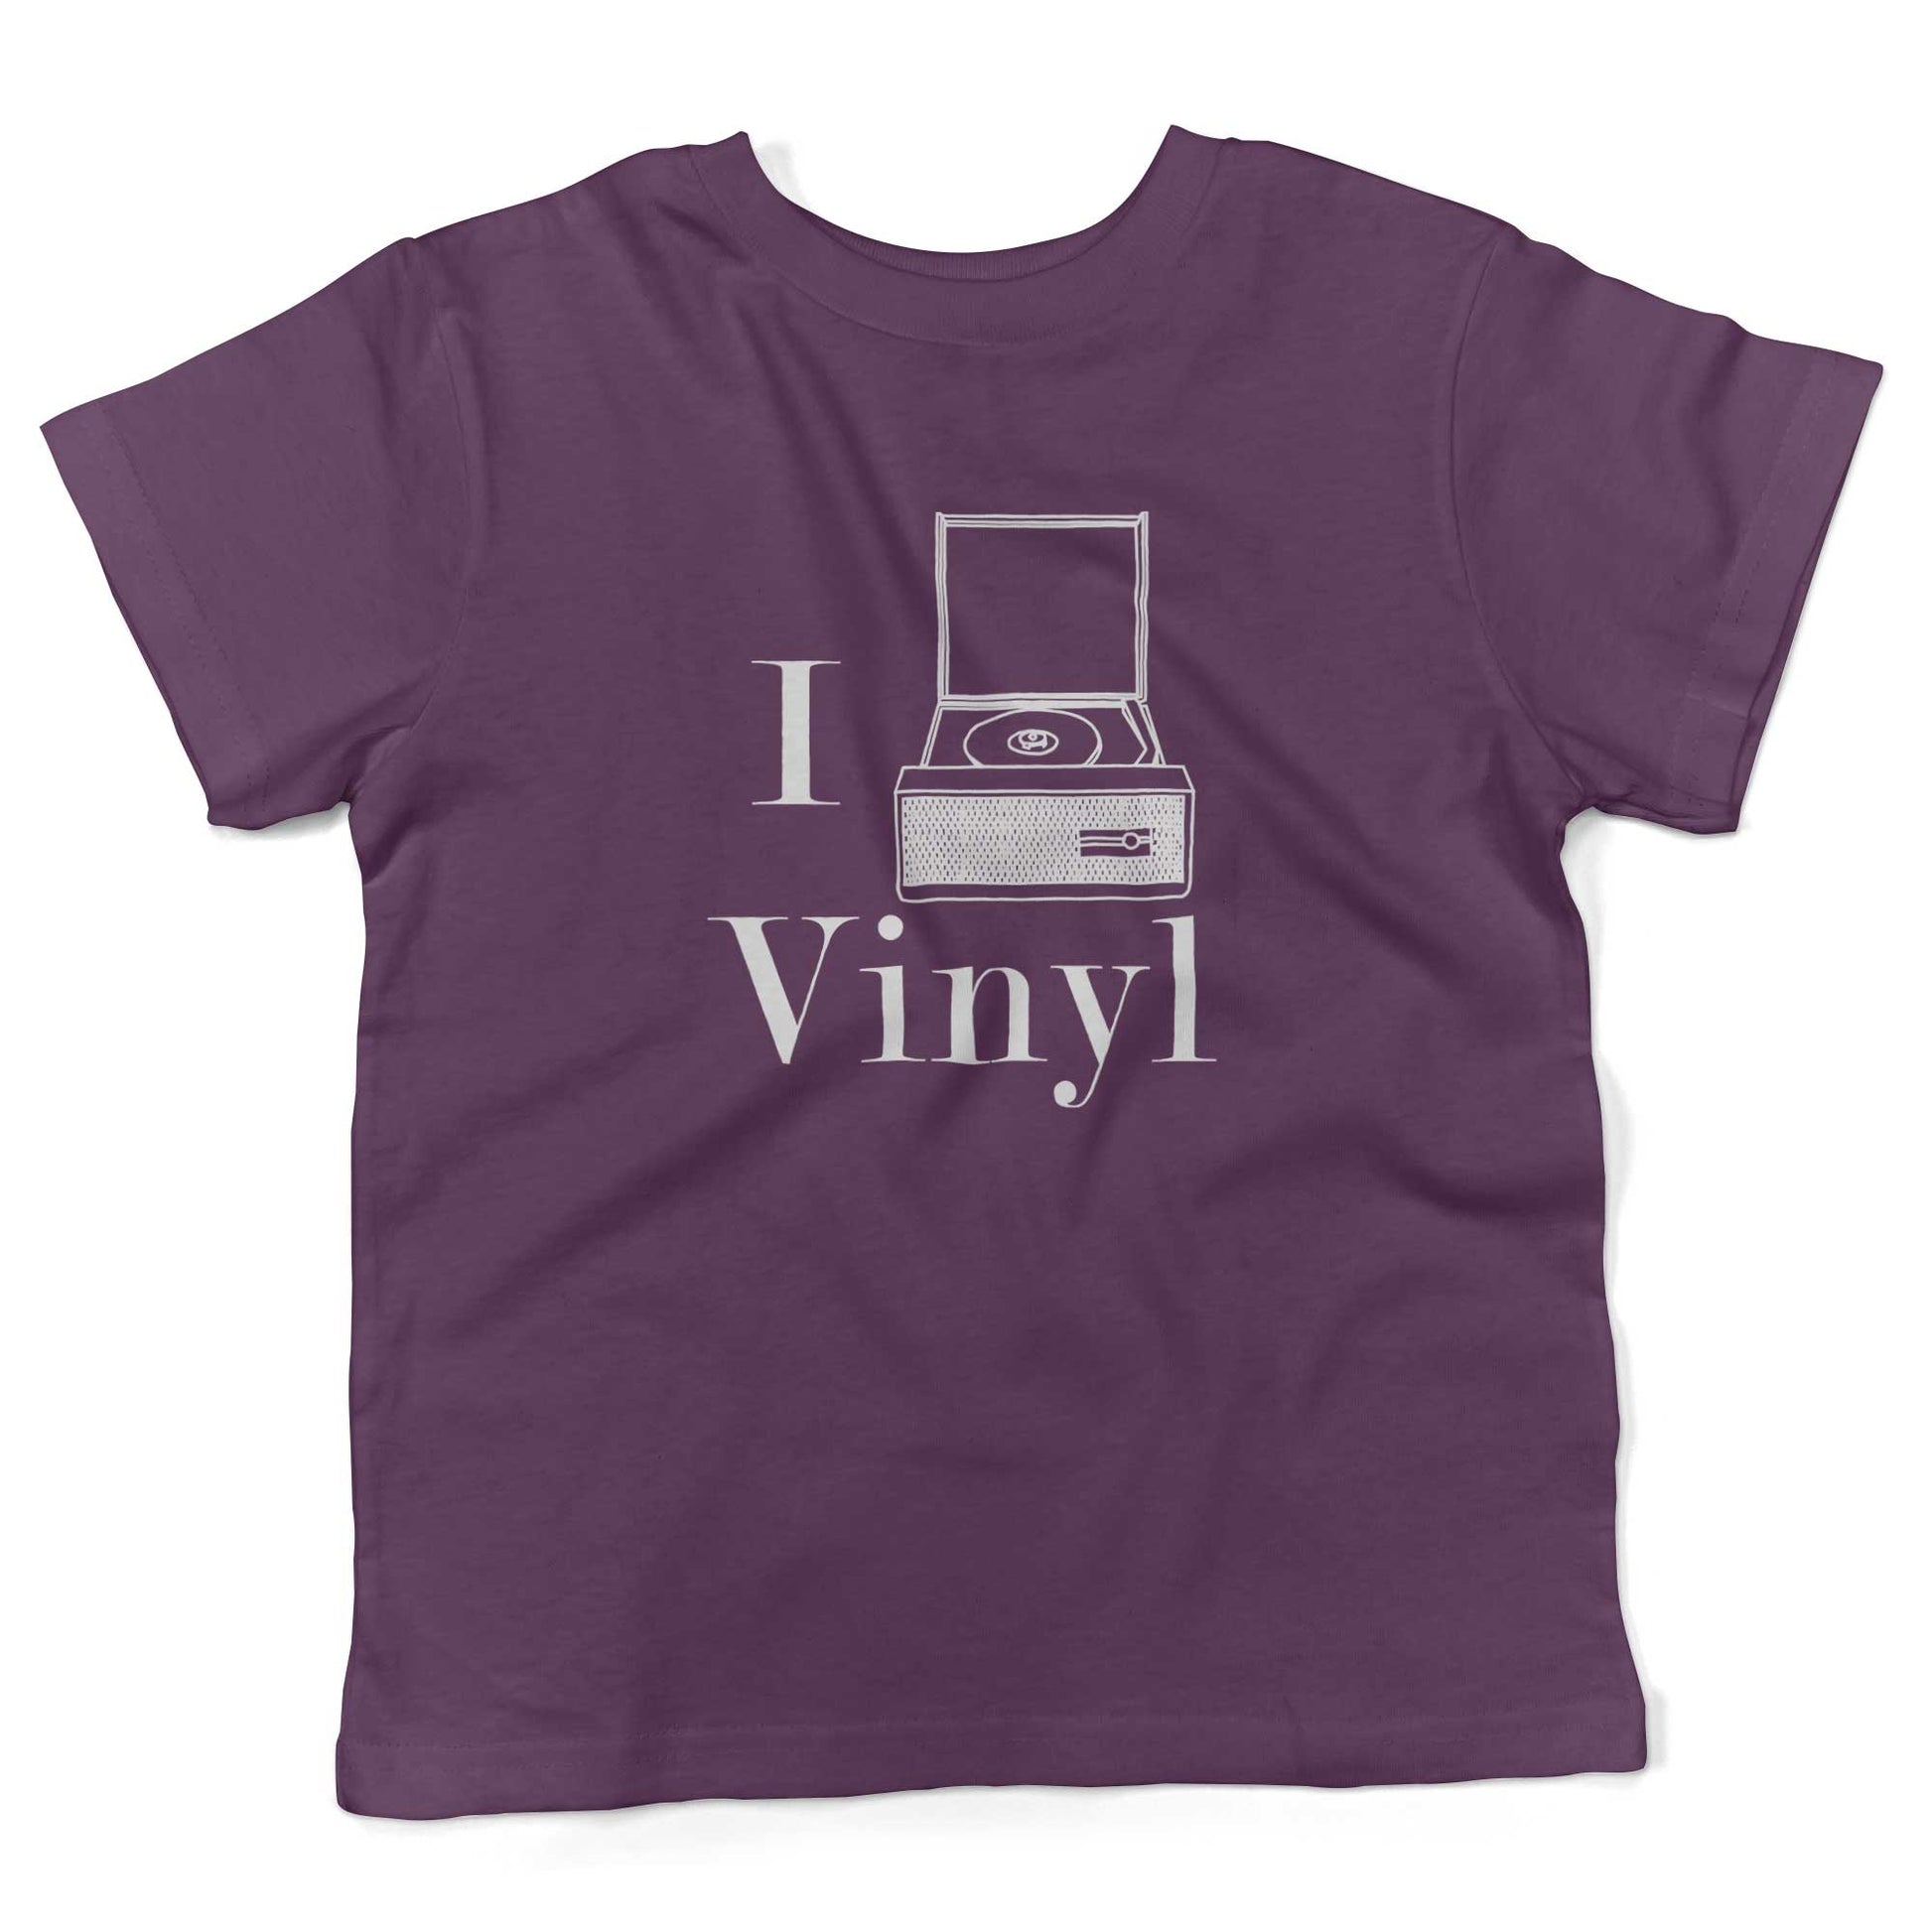 I Play Vinyl Toddler Shirt-Organic Purple-2T